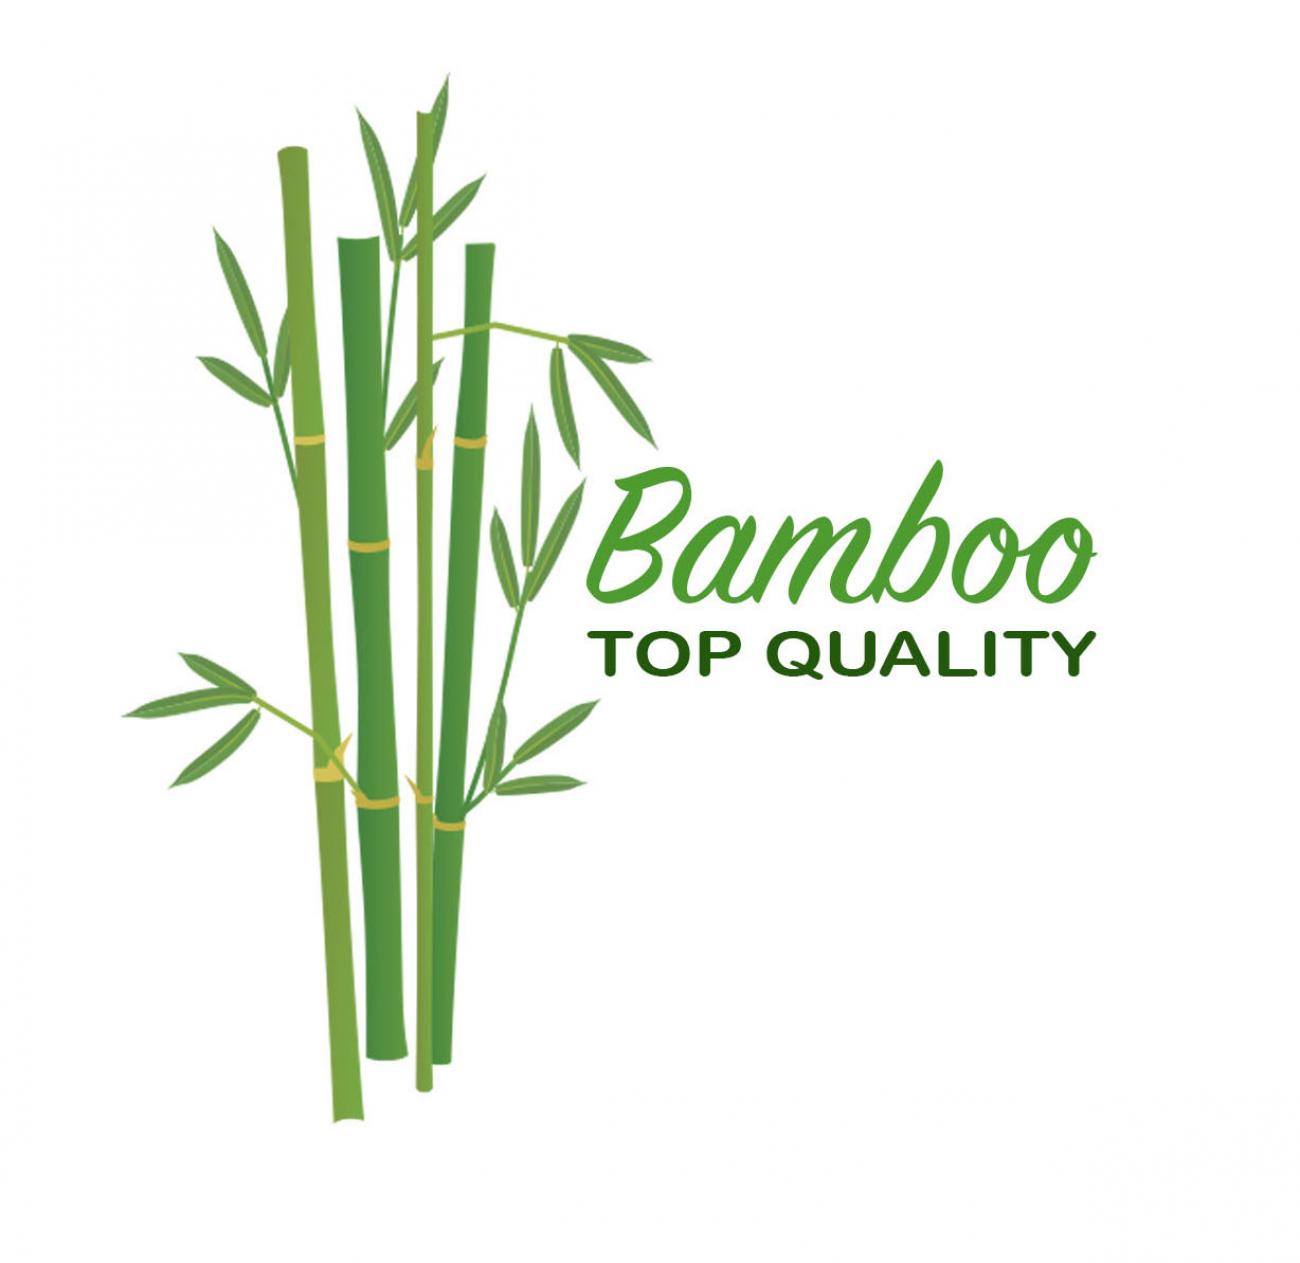 UNCINETTI  IN  BAMBOO